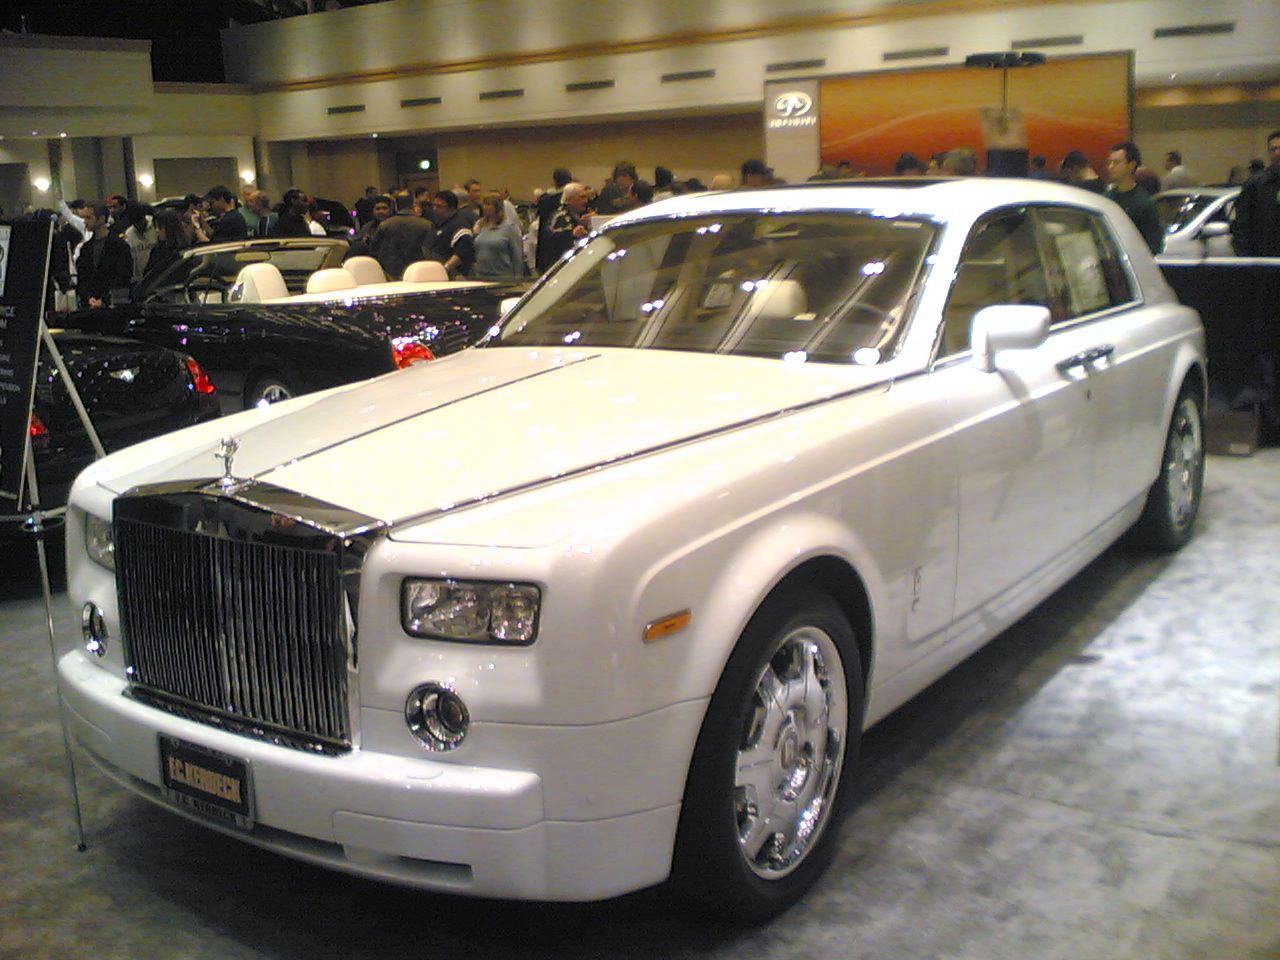 File:Rolls-royce phantom.jpg - Wikimedia Commons